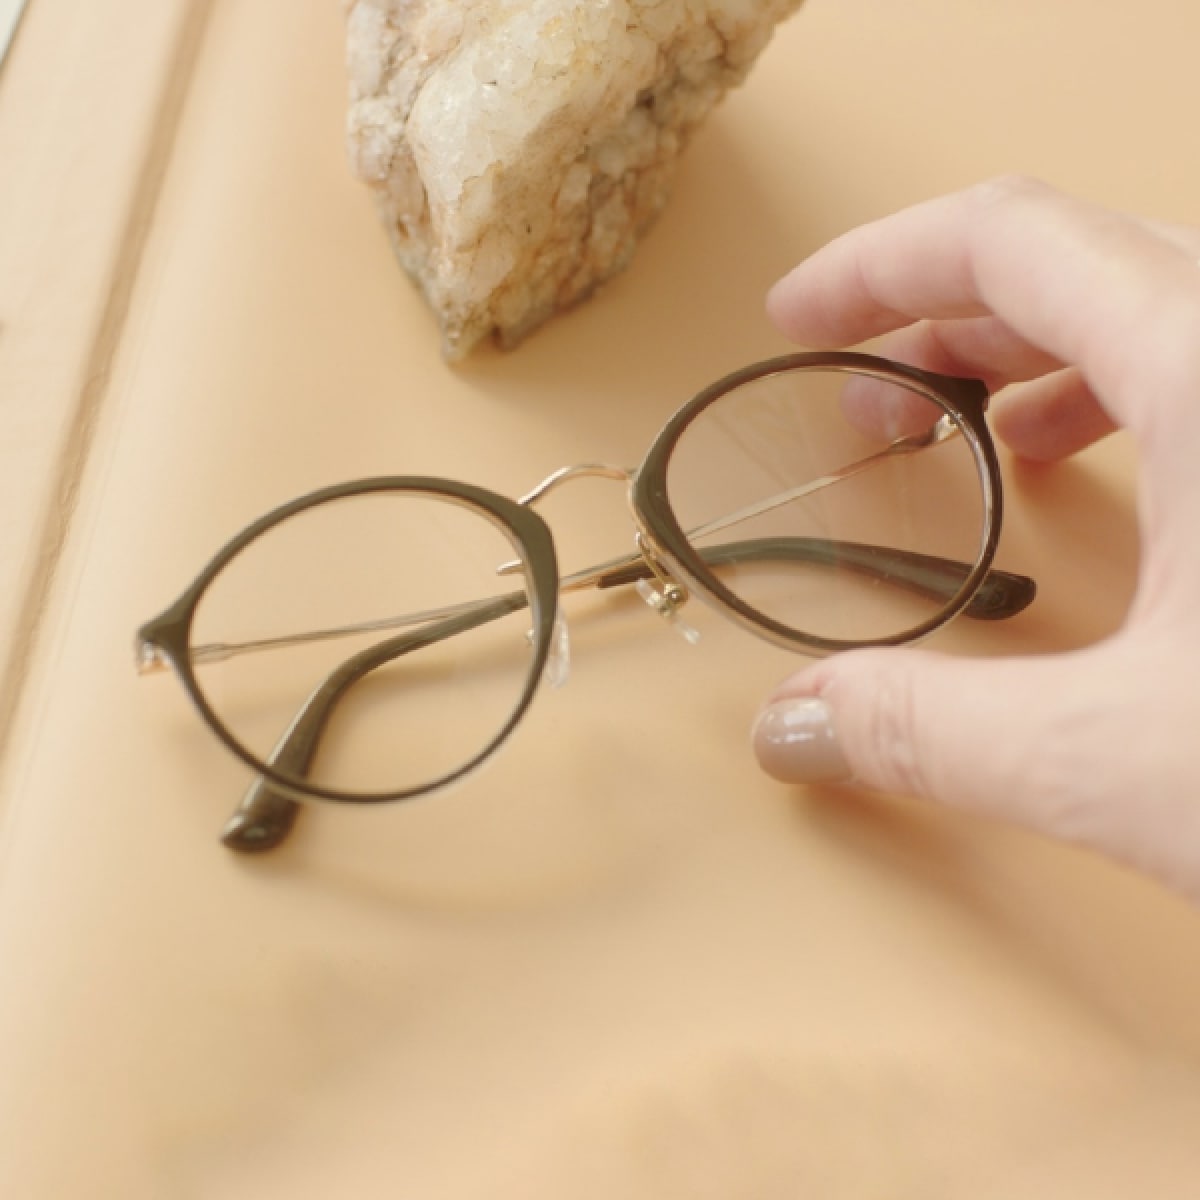 Buy Desire X Clubmaster Half Rim Round Eyeglasses Block Anti glare Glasses  Zero Power for Eye Protection Eyewear Frame at Amazon.in